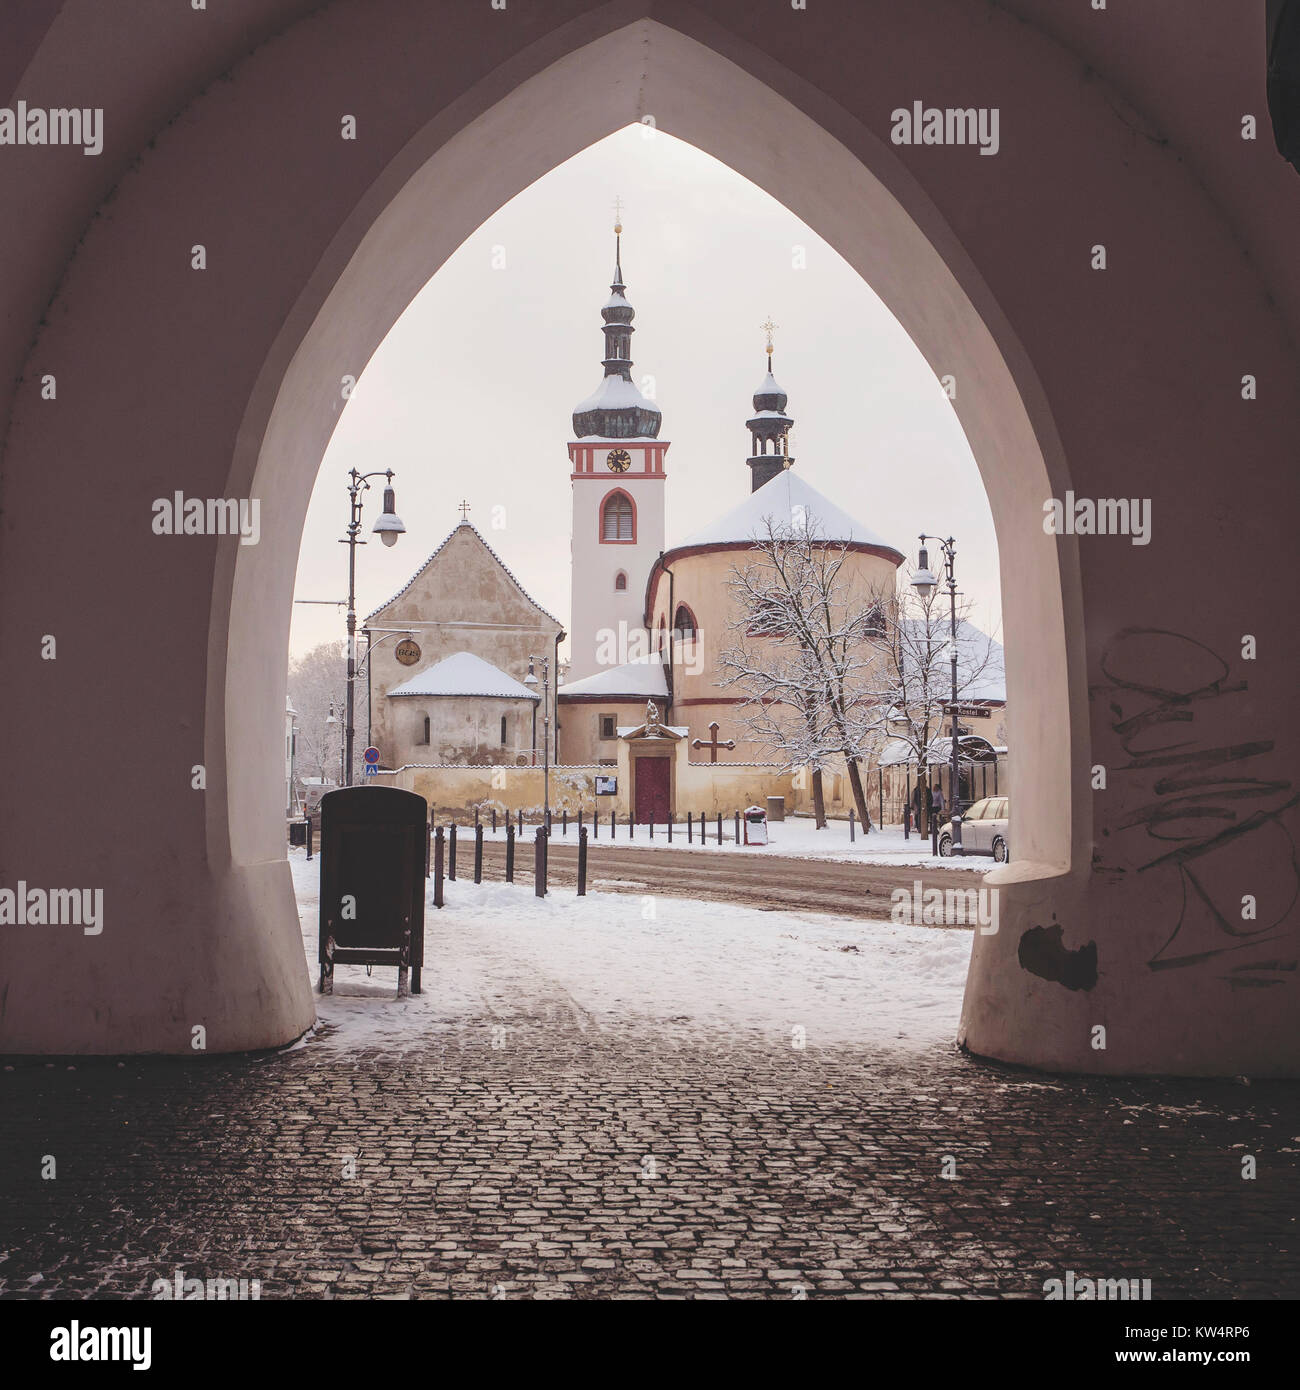 Brandys nad Labem - Stara Boleslav - Saint Wenceslas basilica and St Kliment church (national cultural landmarks), Czech republic Stock Photo